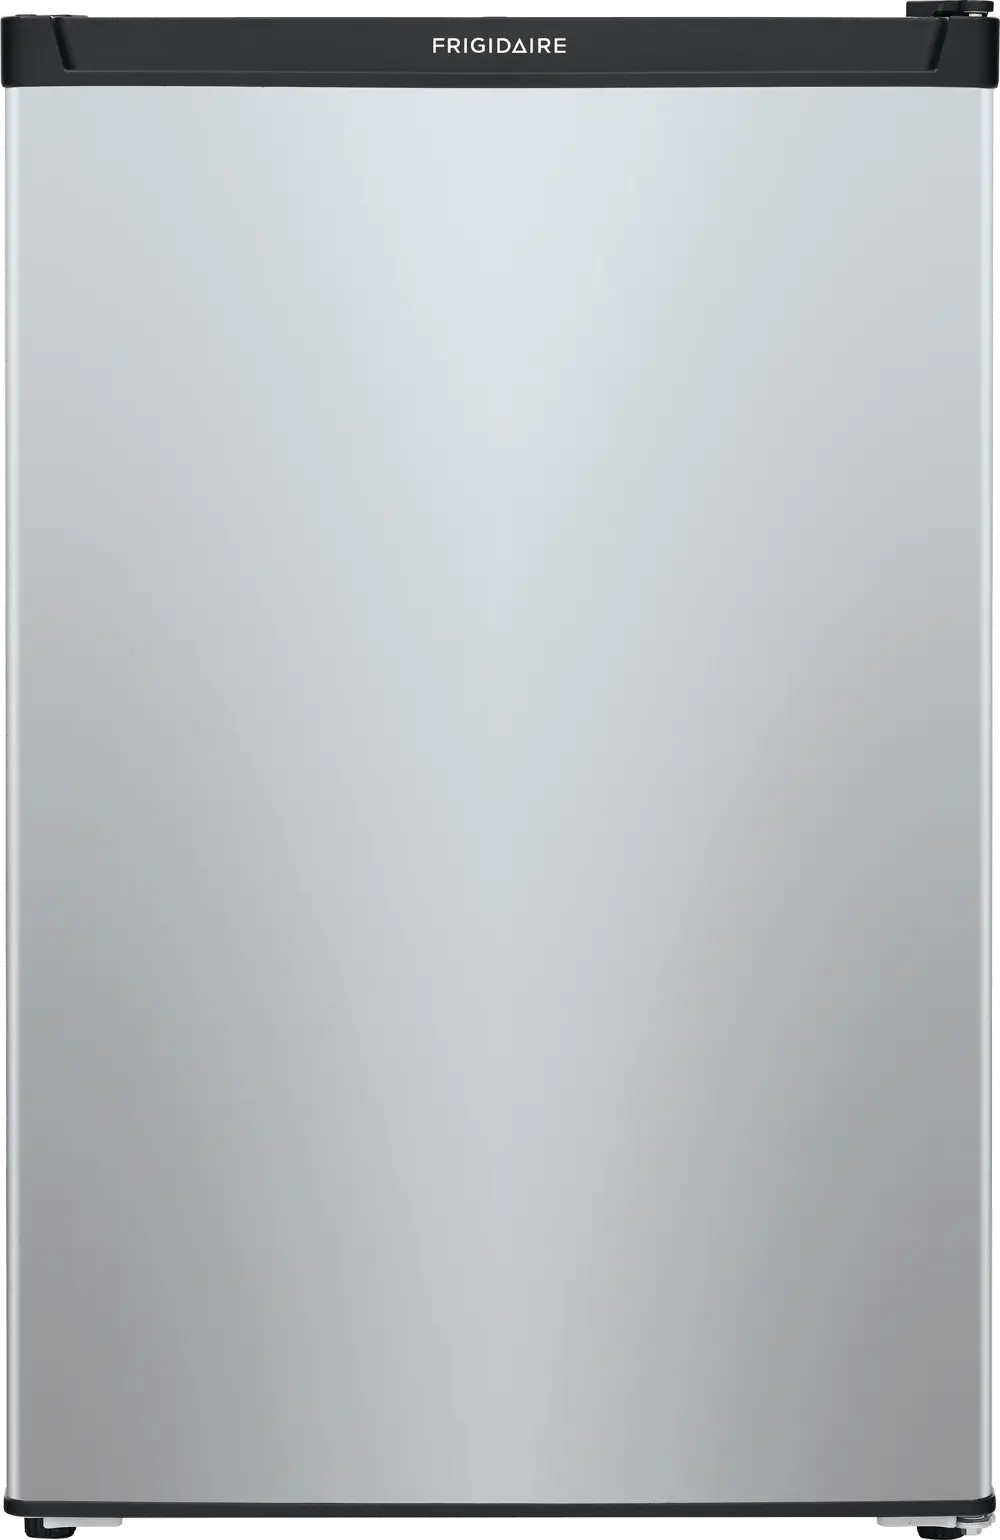 FFPE4533UM Frigidaire Compact Refrigerator - 4.5 cu. ft. Silver Mist-1